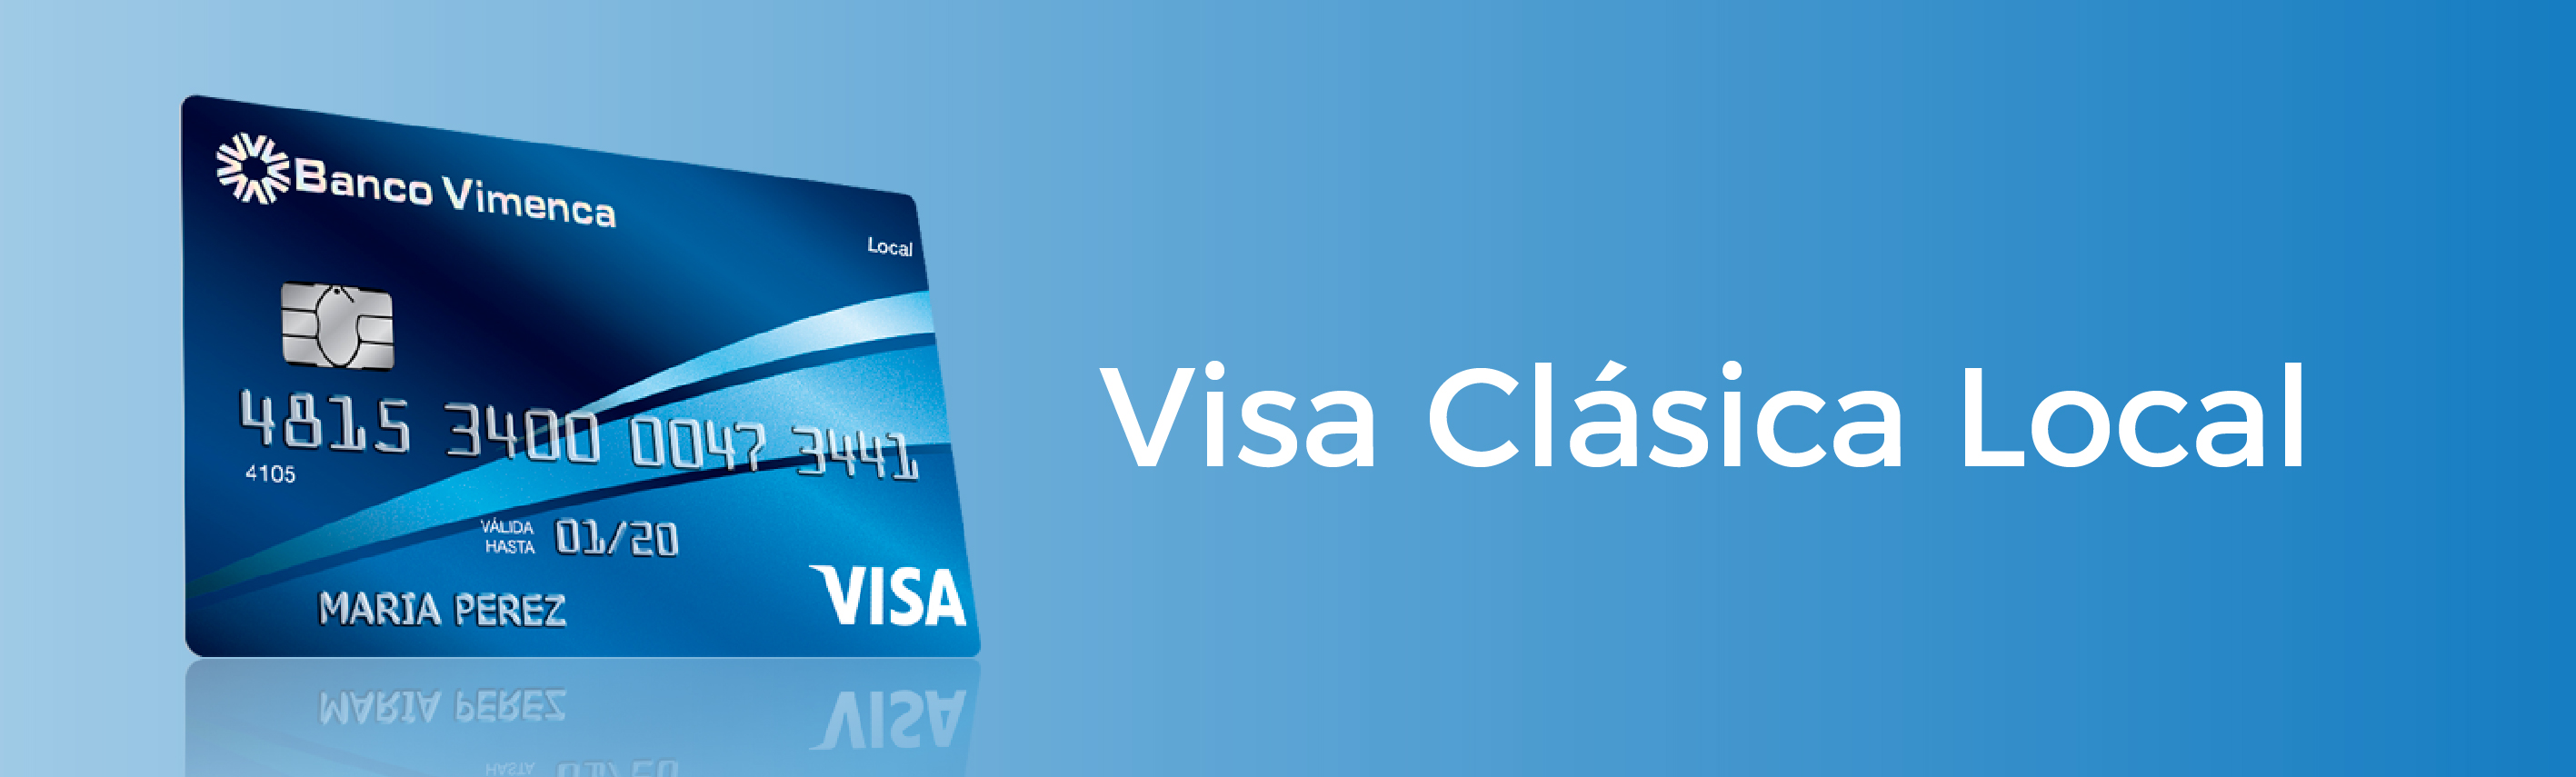 Tarjeta de Crédito Visa Clásica Local